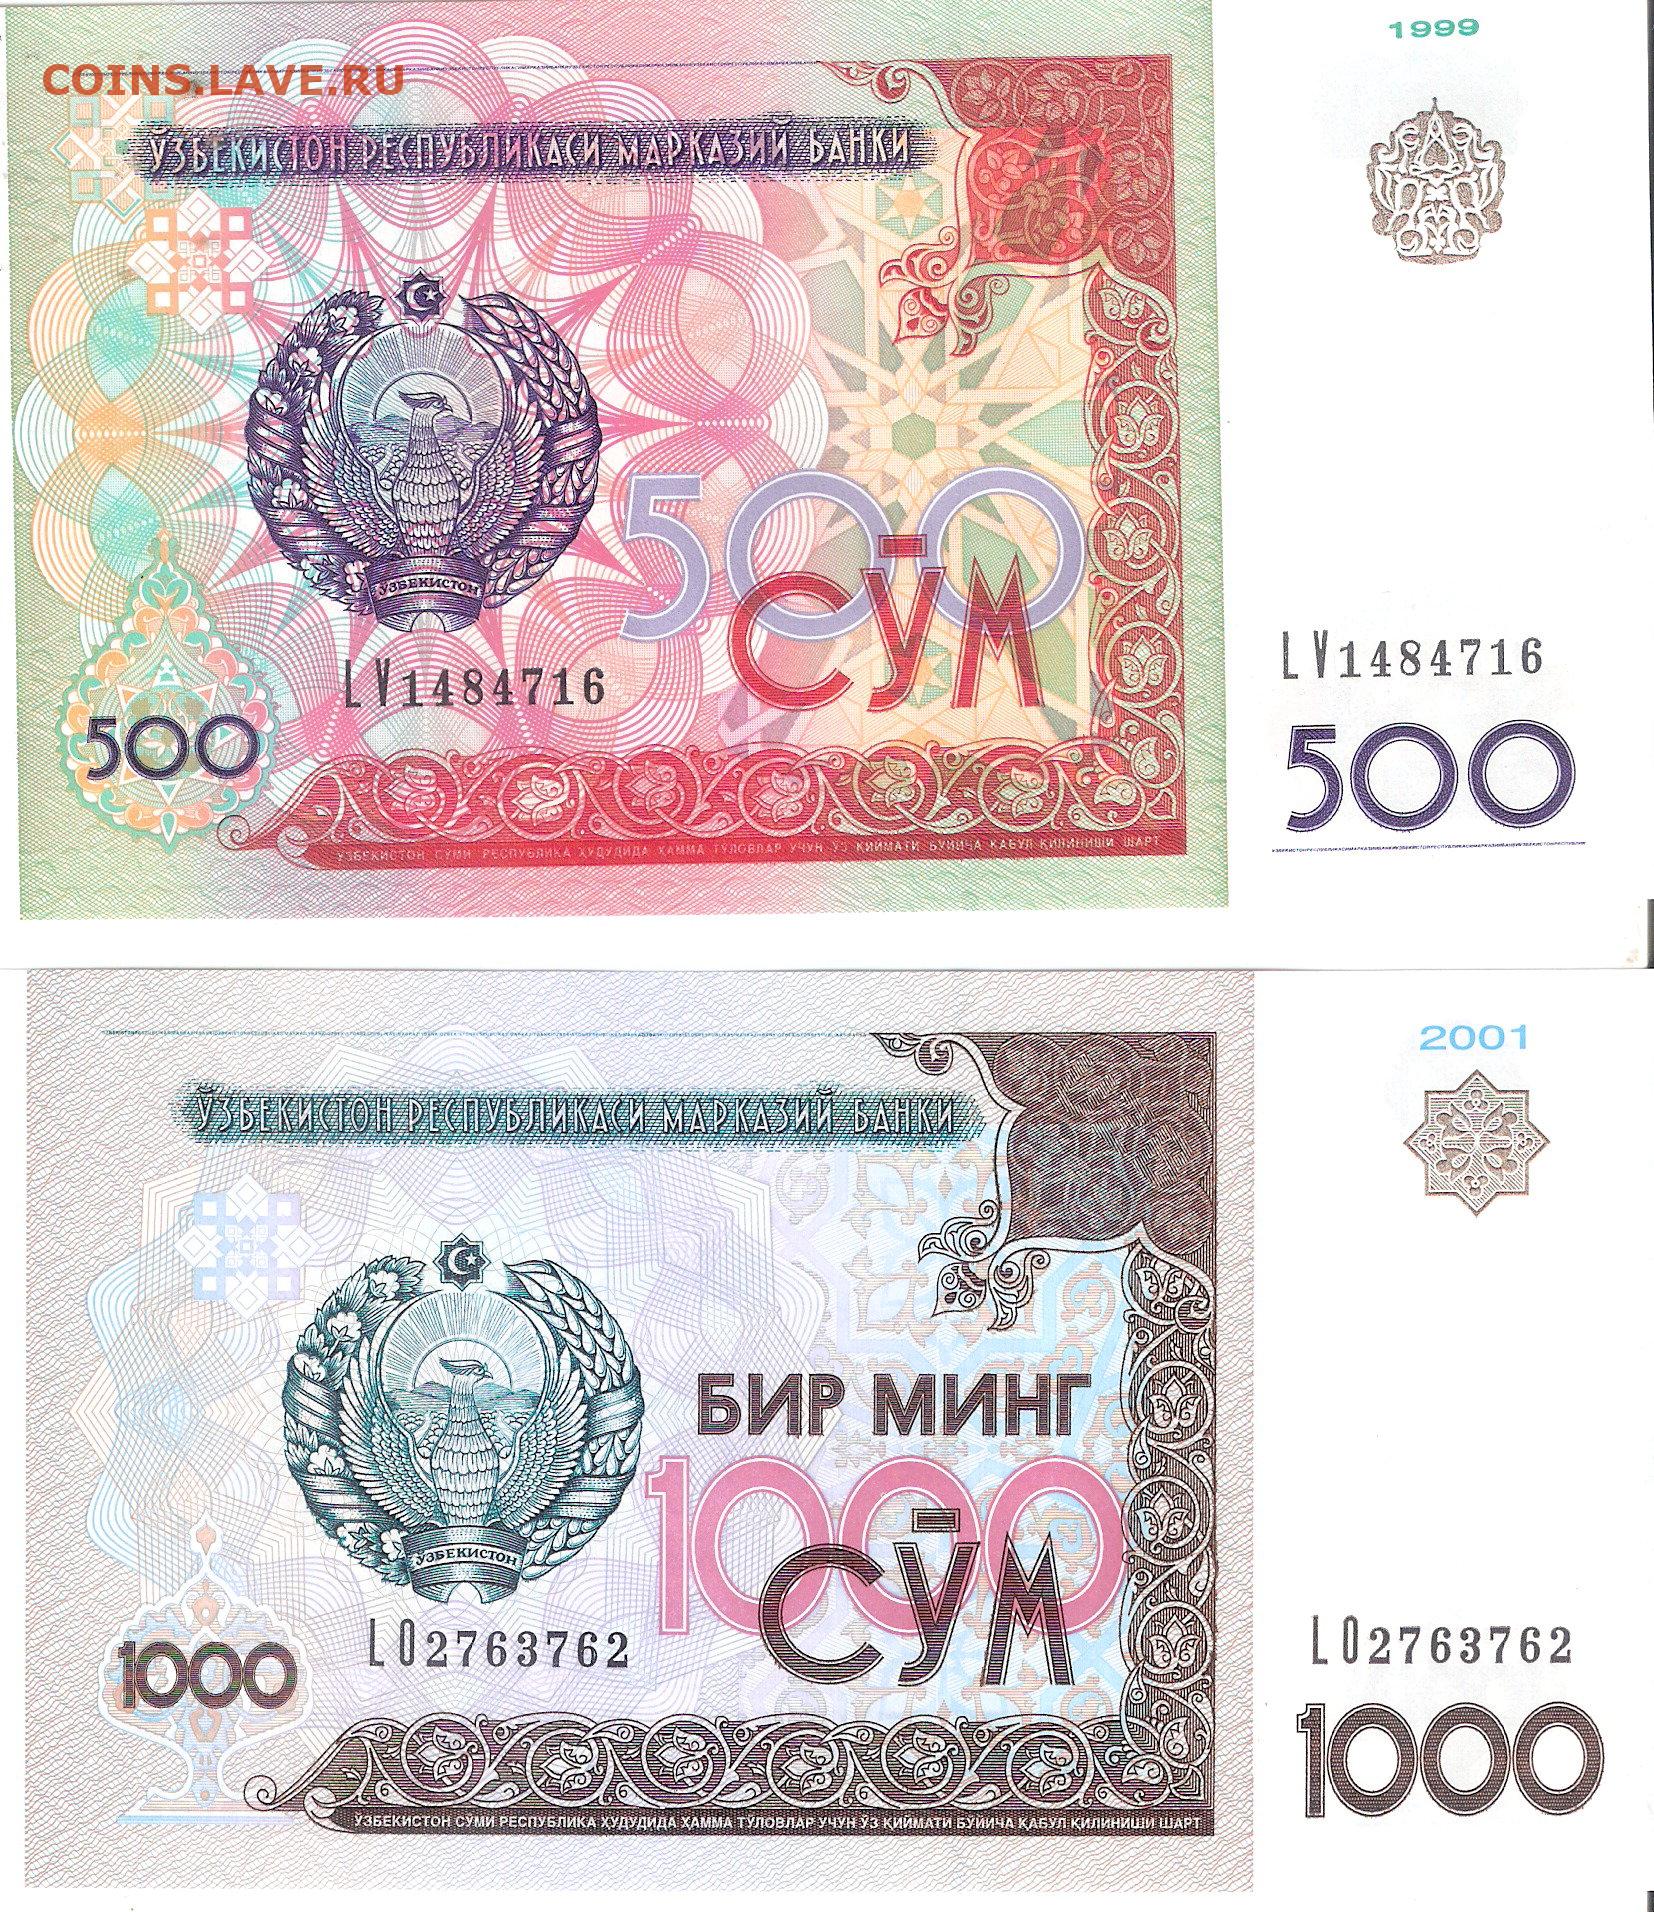 Сколько сум в 1 рубле. 500 Сўм. Узбекистан 500 сом 1999. Банкнота 500 сум Узбекистан. Узбекистан 1000 сум 2001.